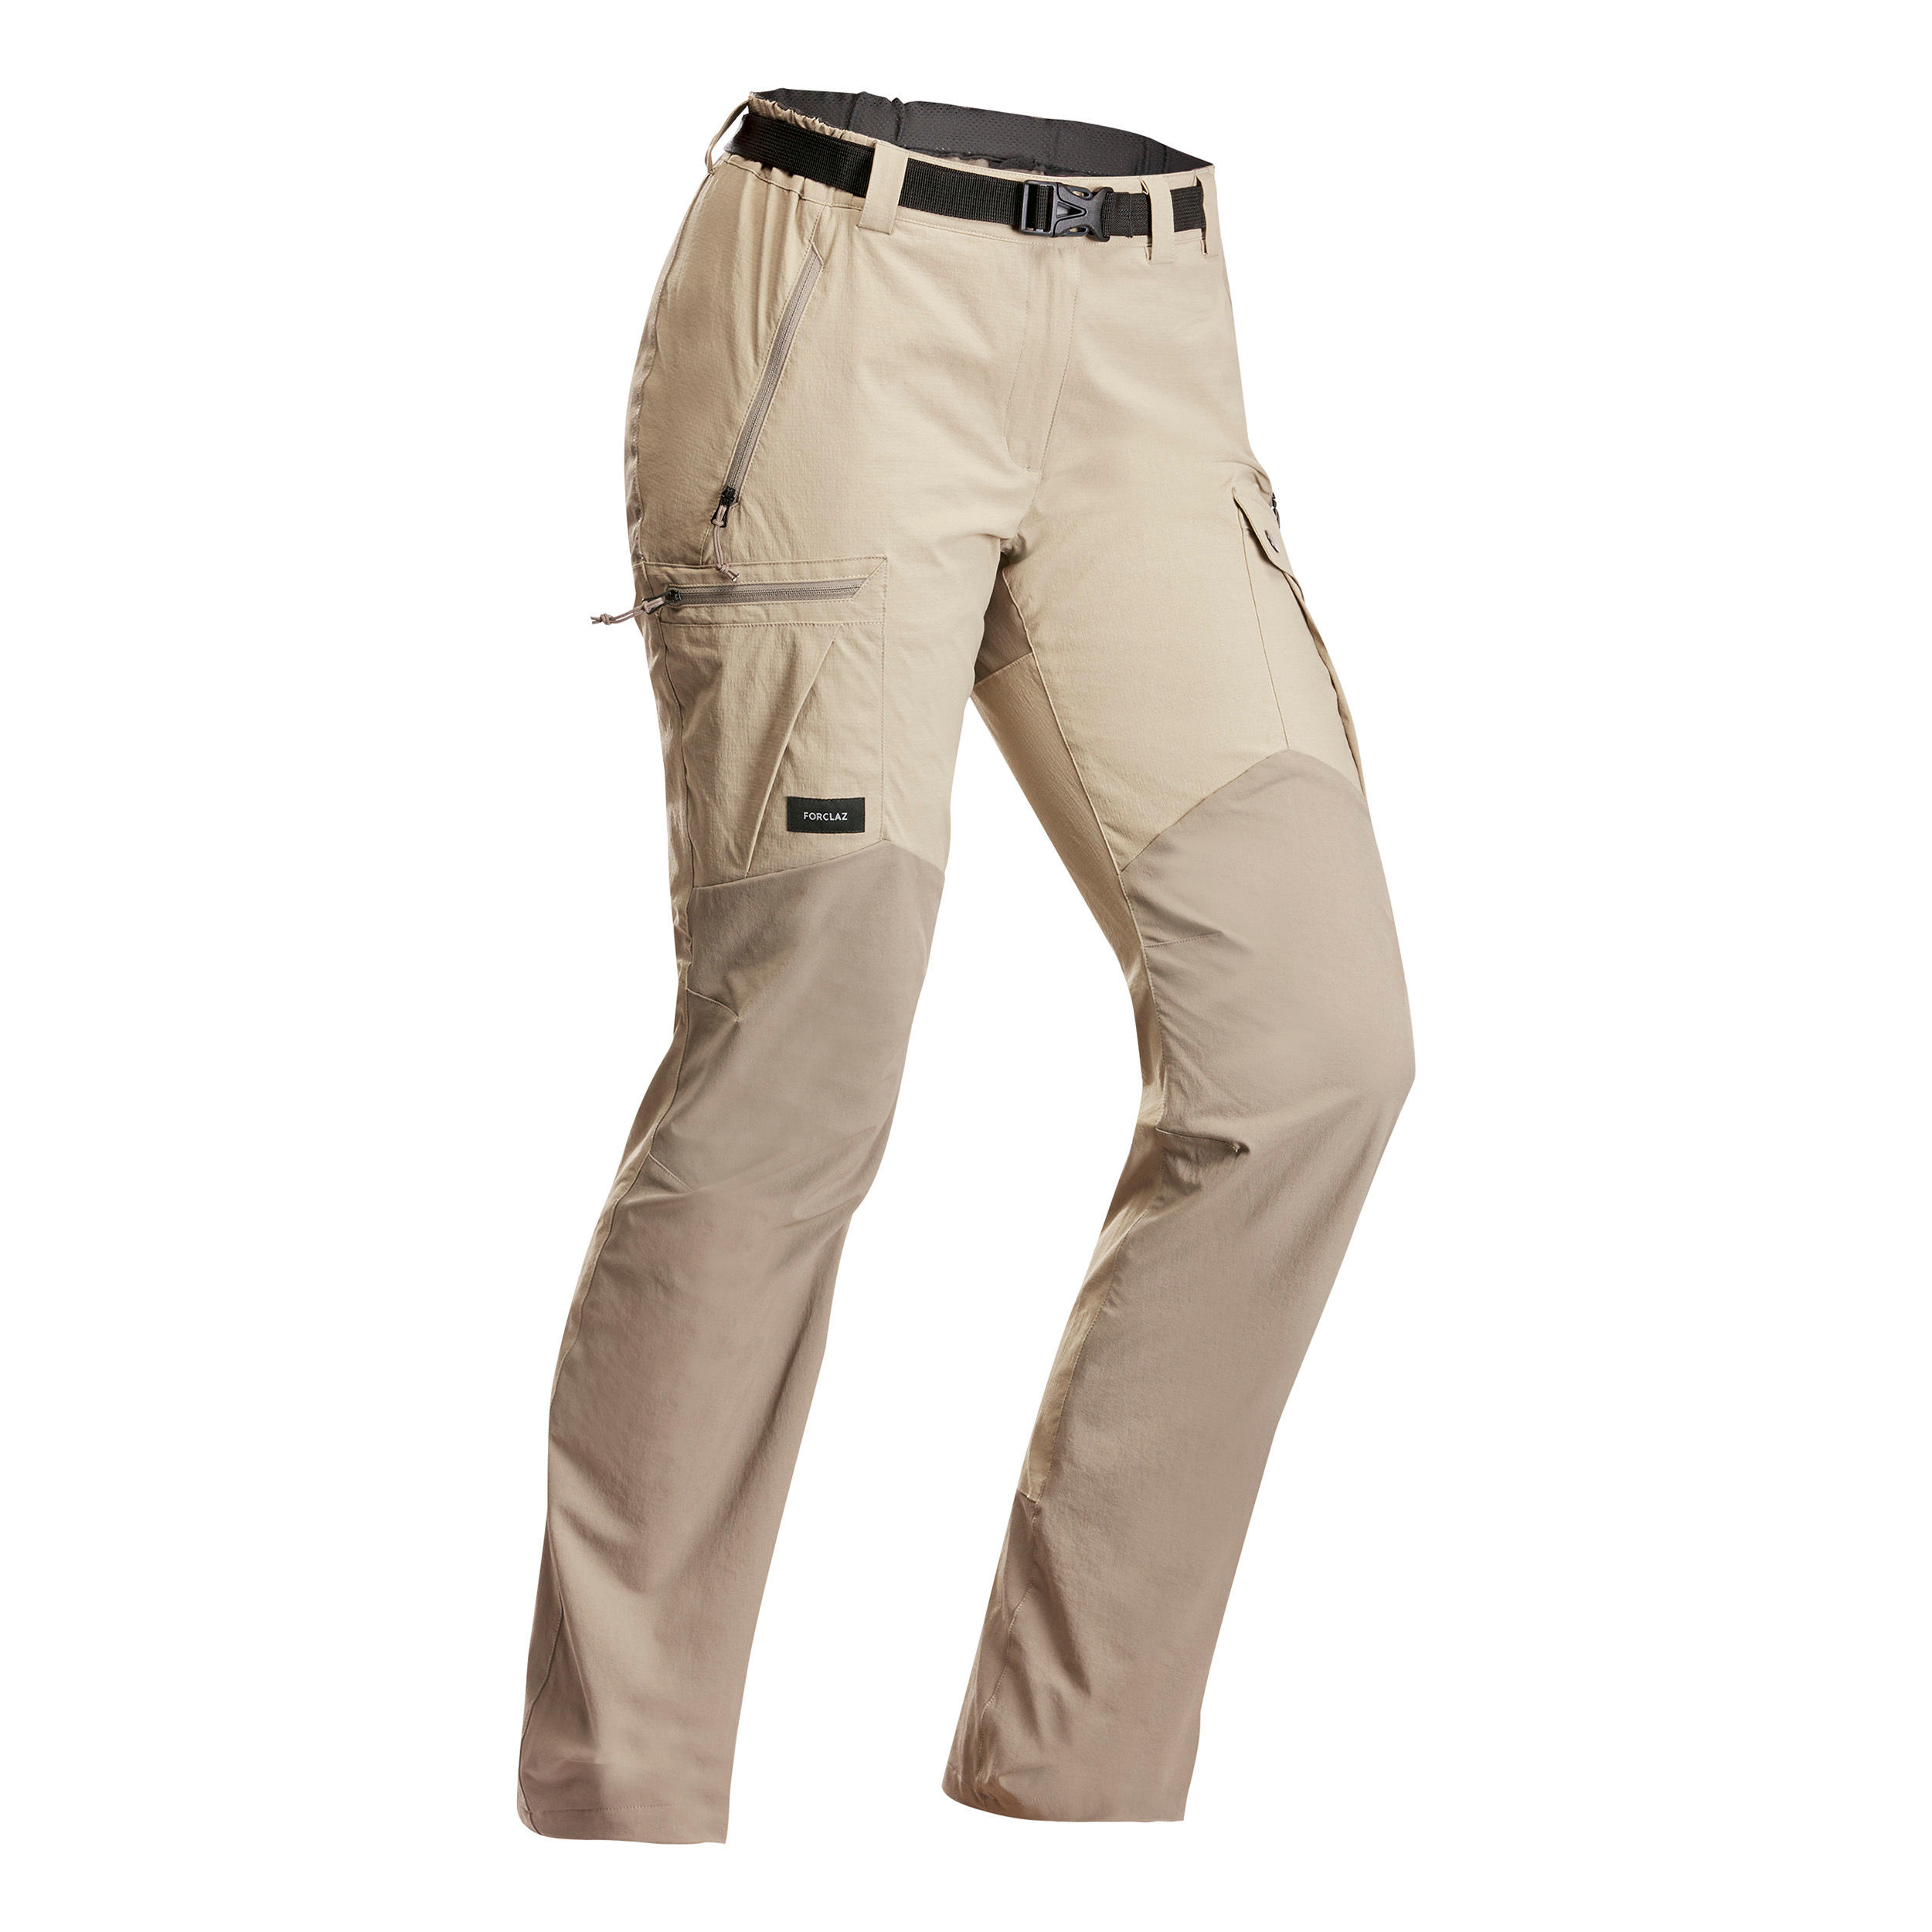 FORCLAZ Women’s Mountain Trekking Resistant Trousers - MT 500 v2 Beige